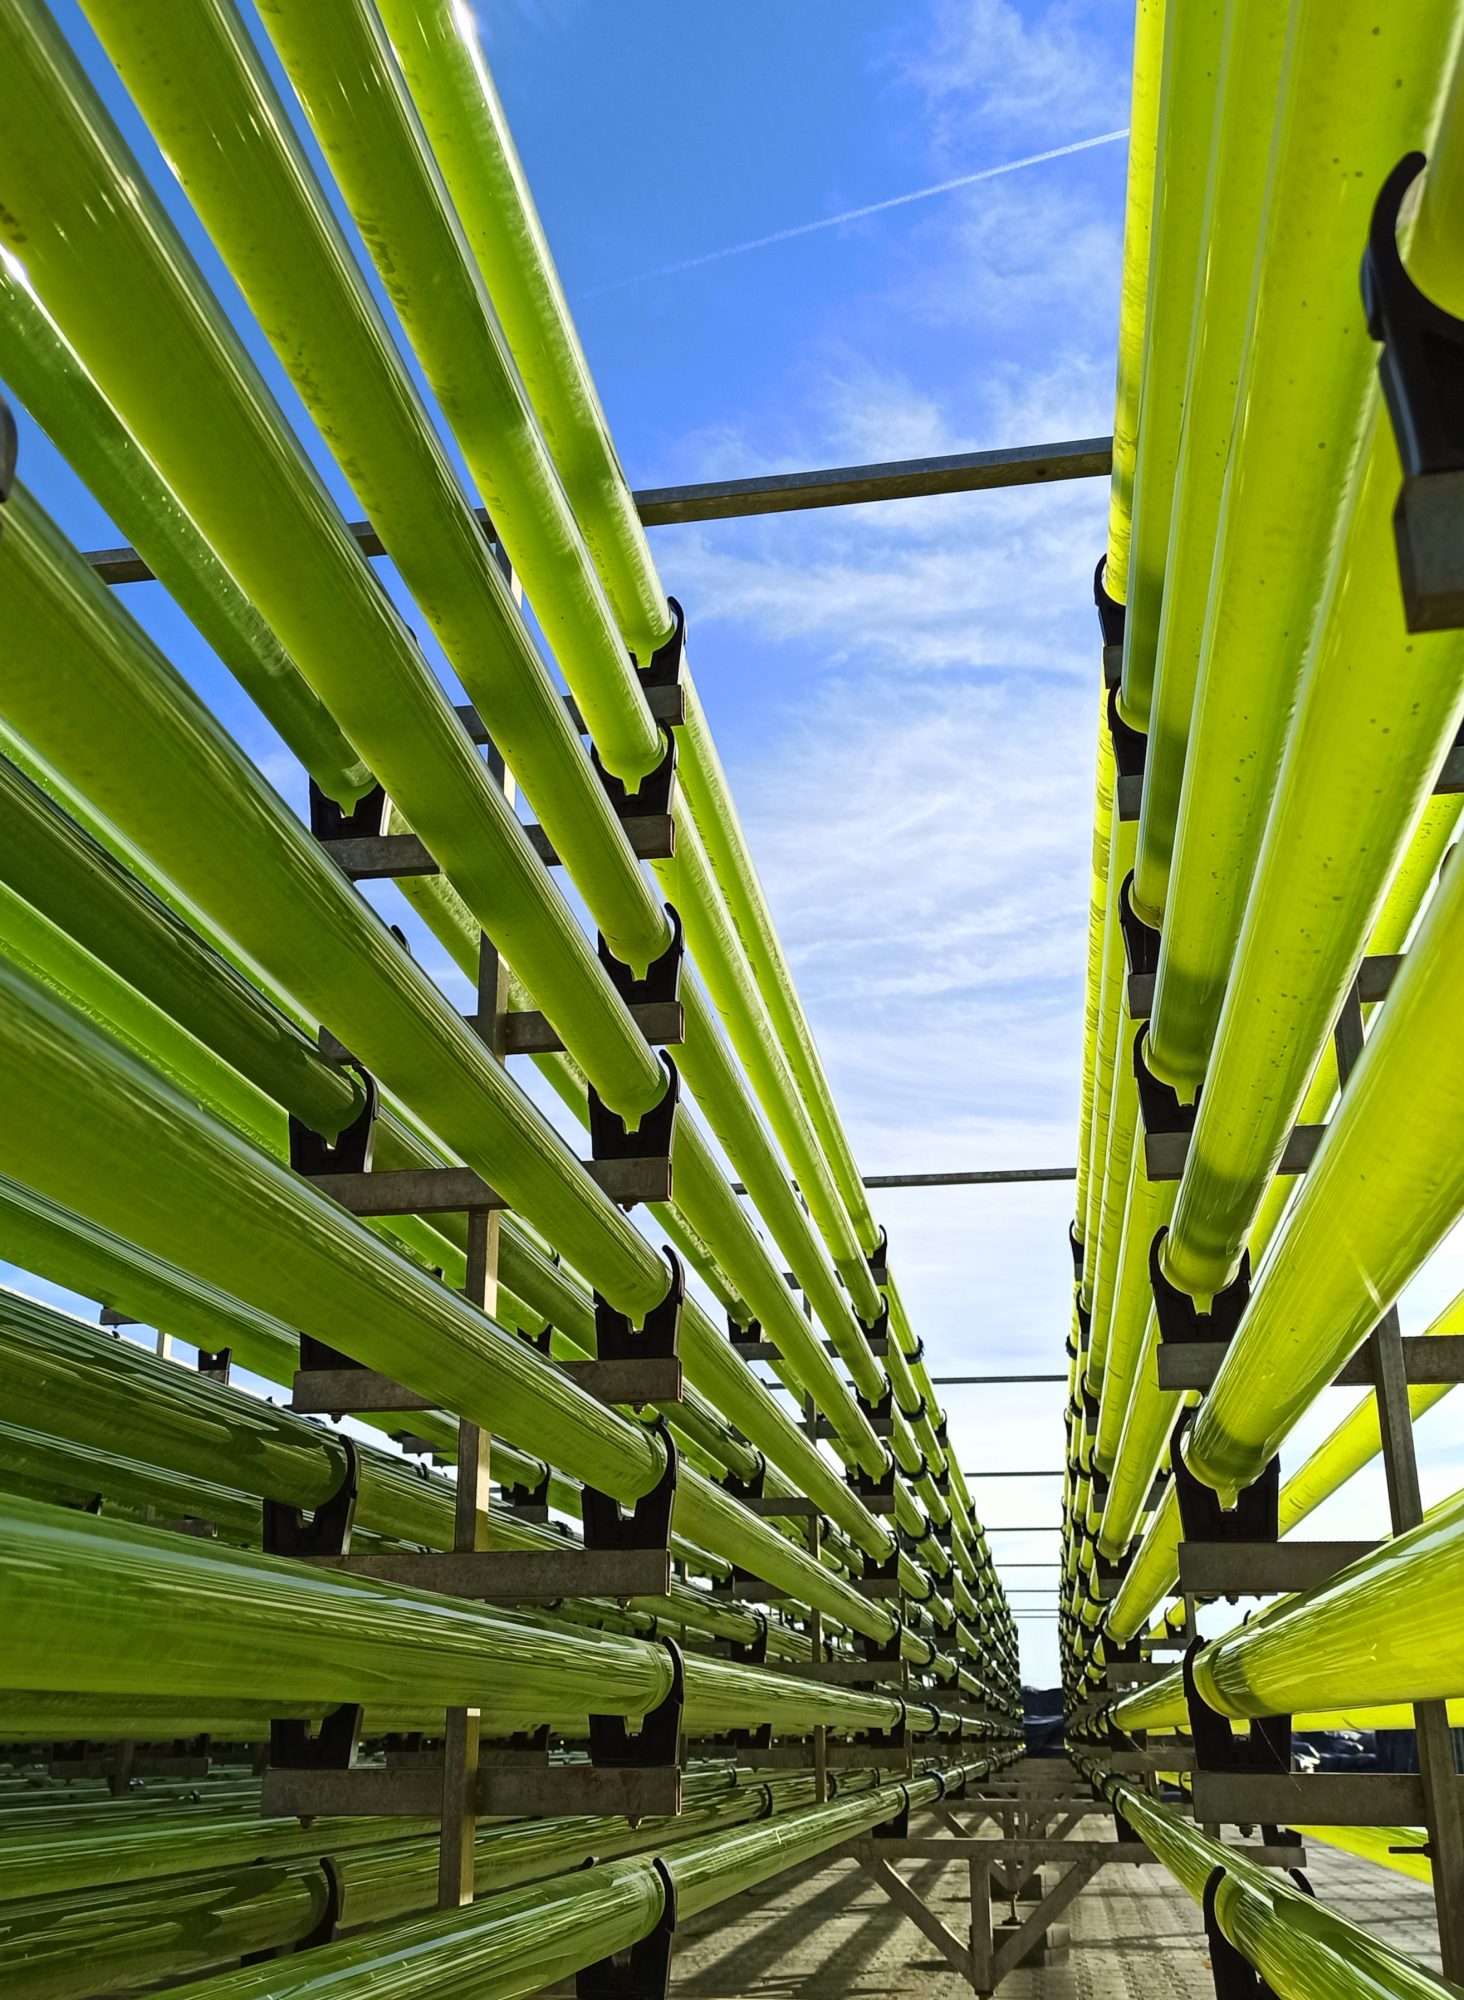 Outdoor photo-bioreactors seize natural sunlight to cultivate microalgae